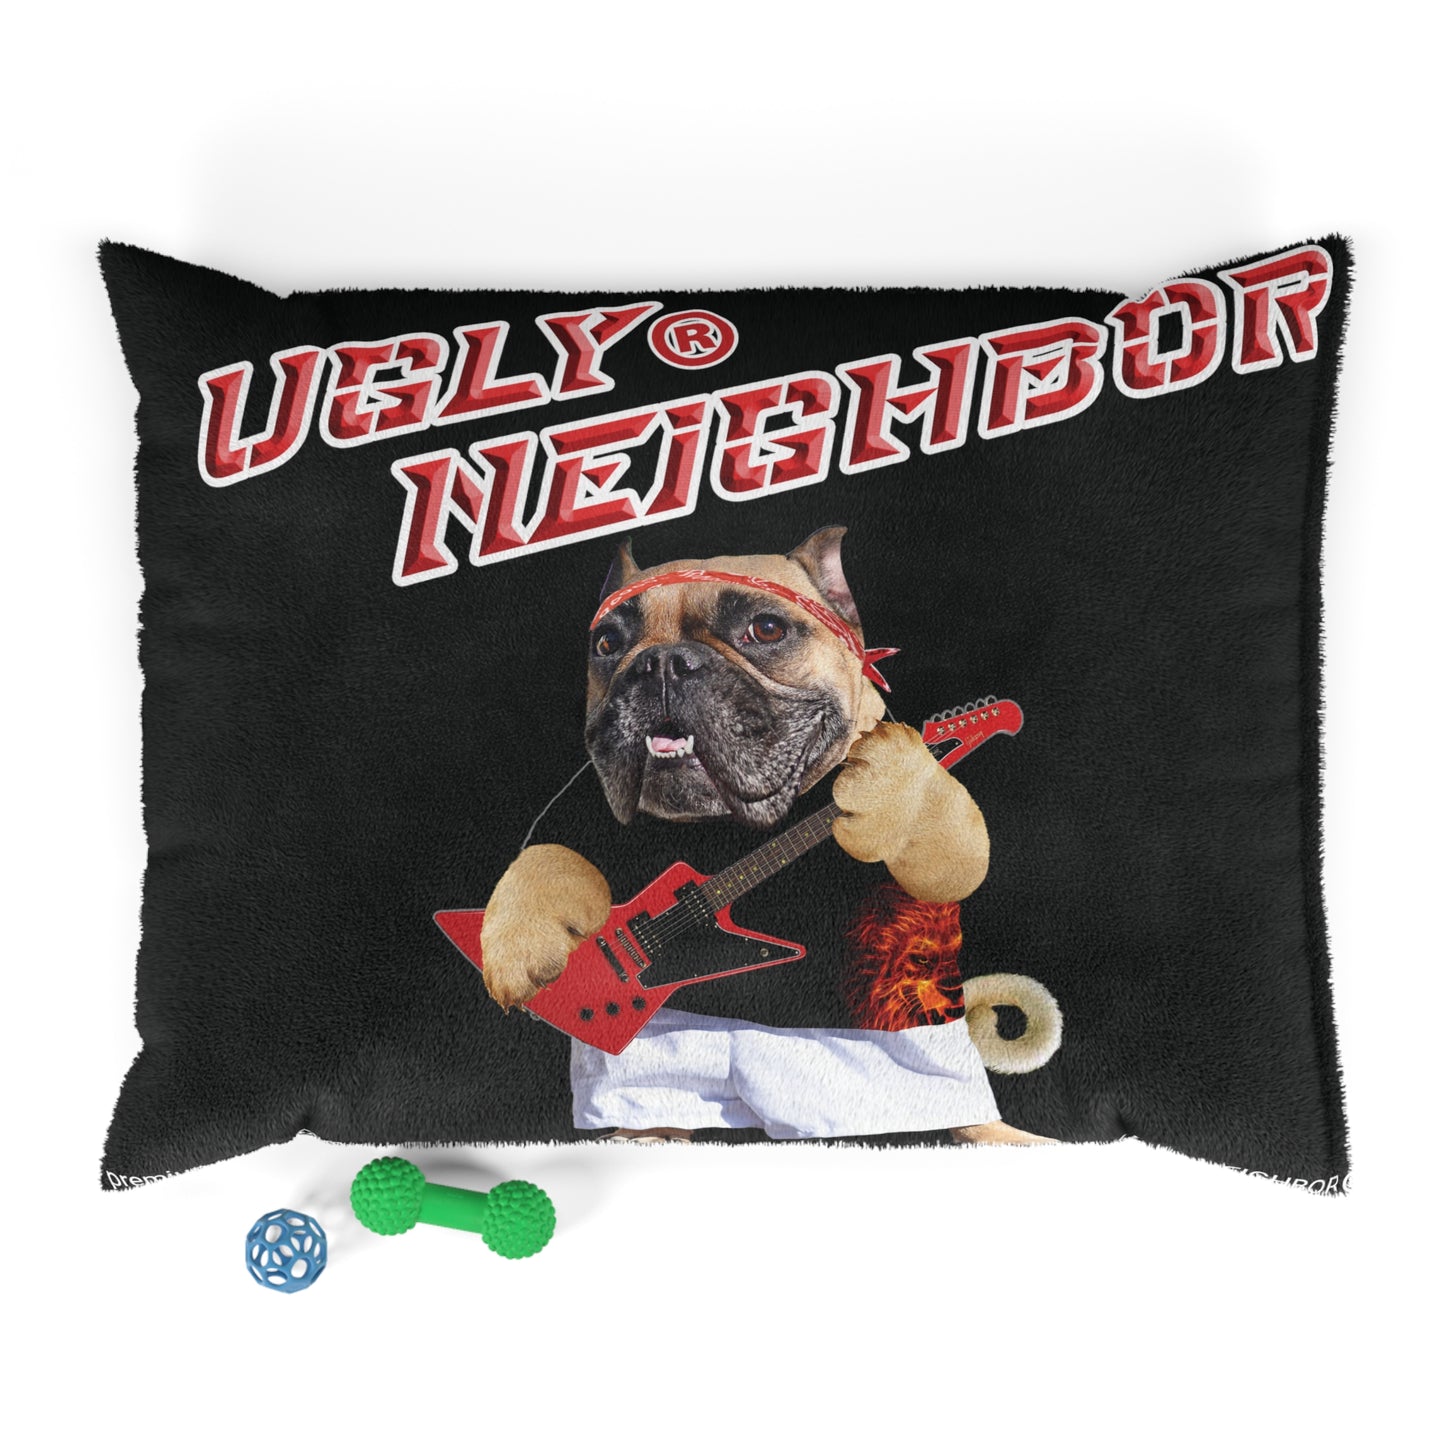 Ugly Neighbor Pet Bed